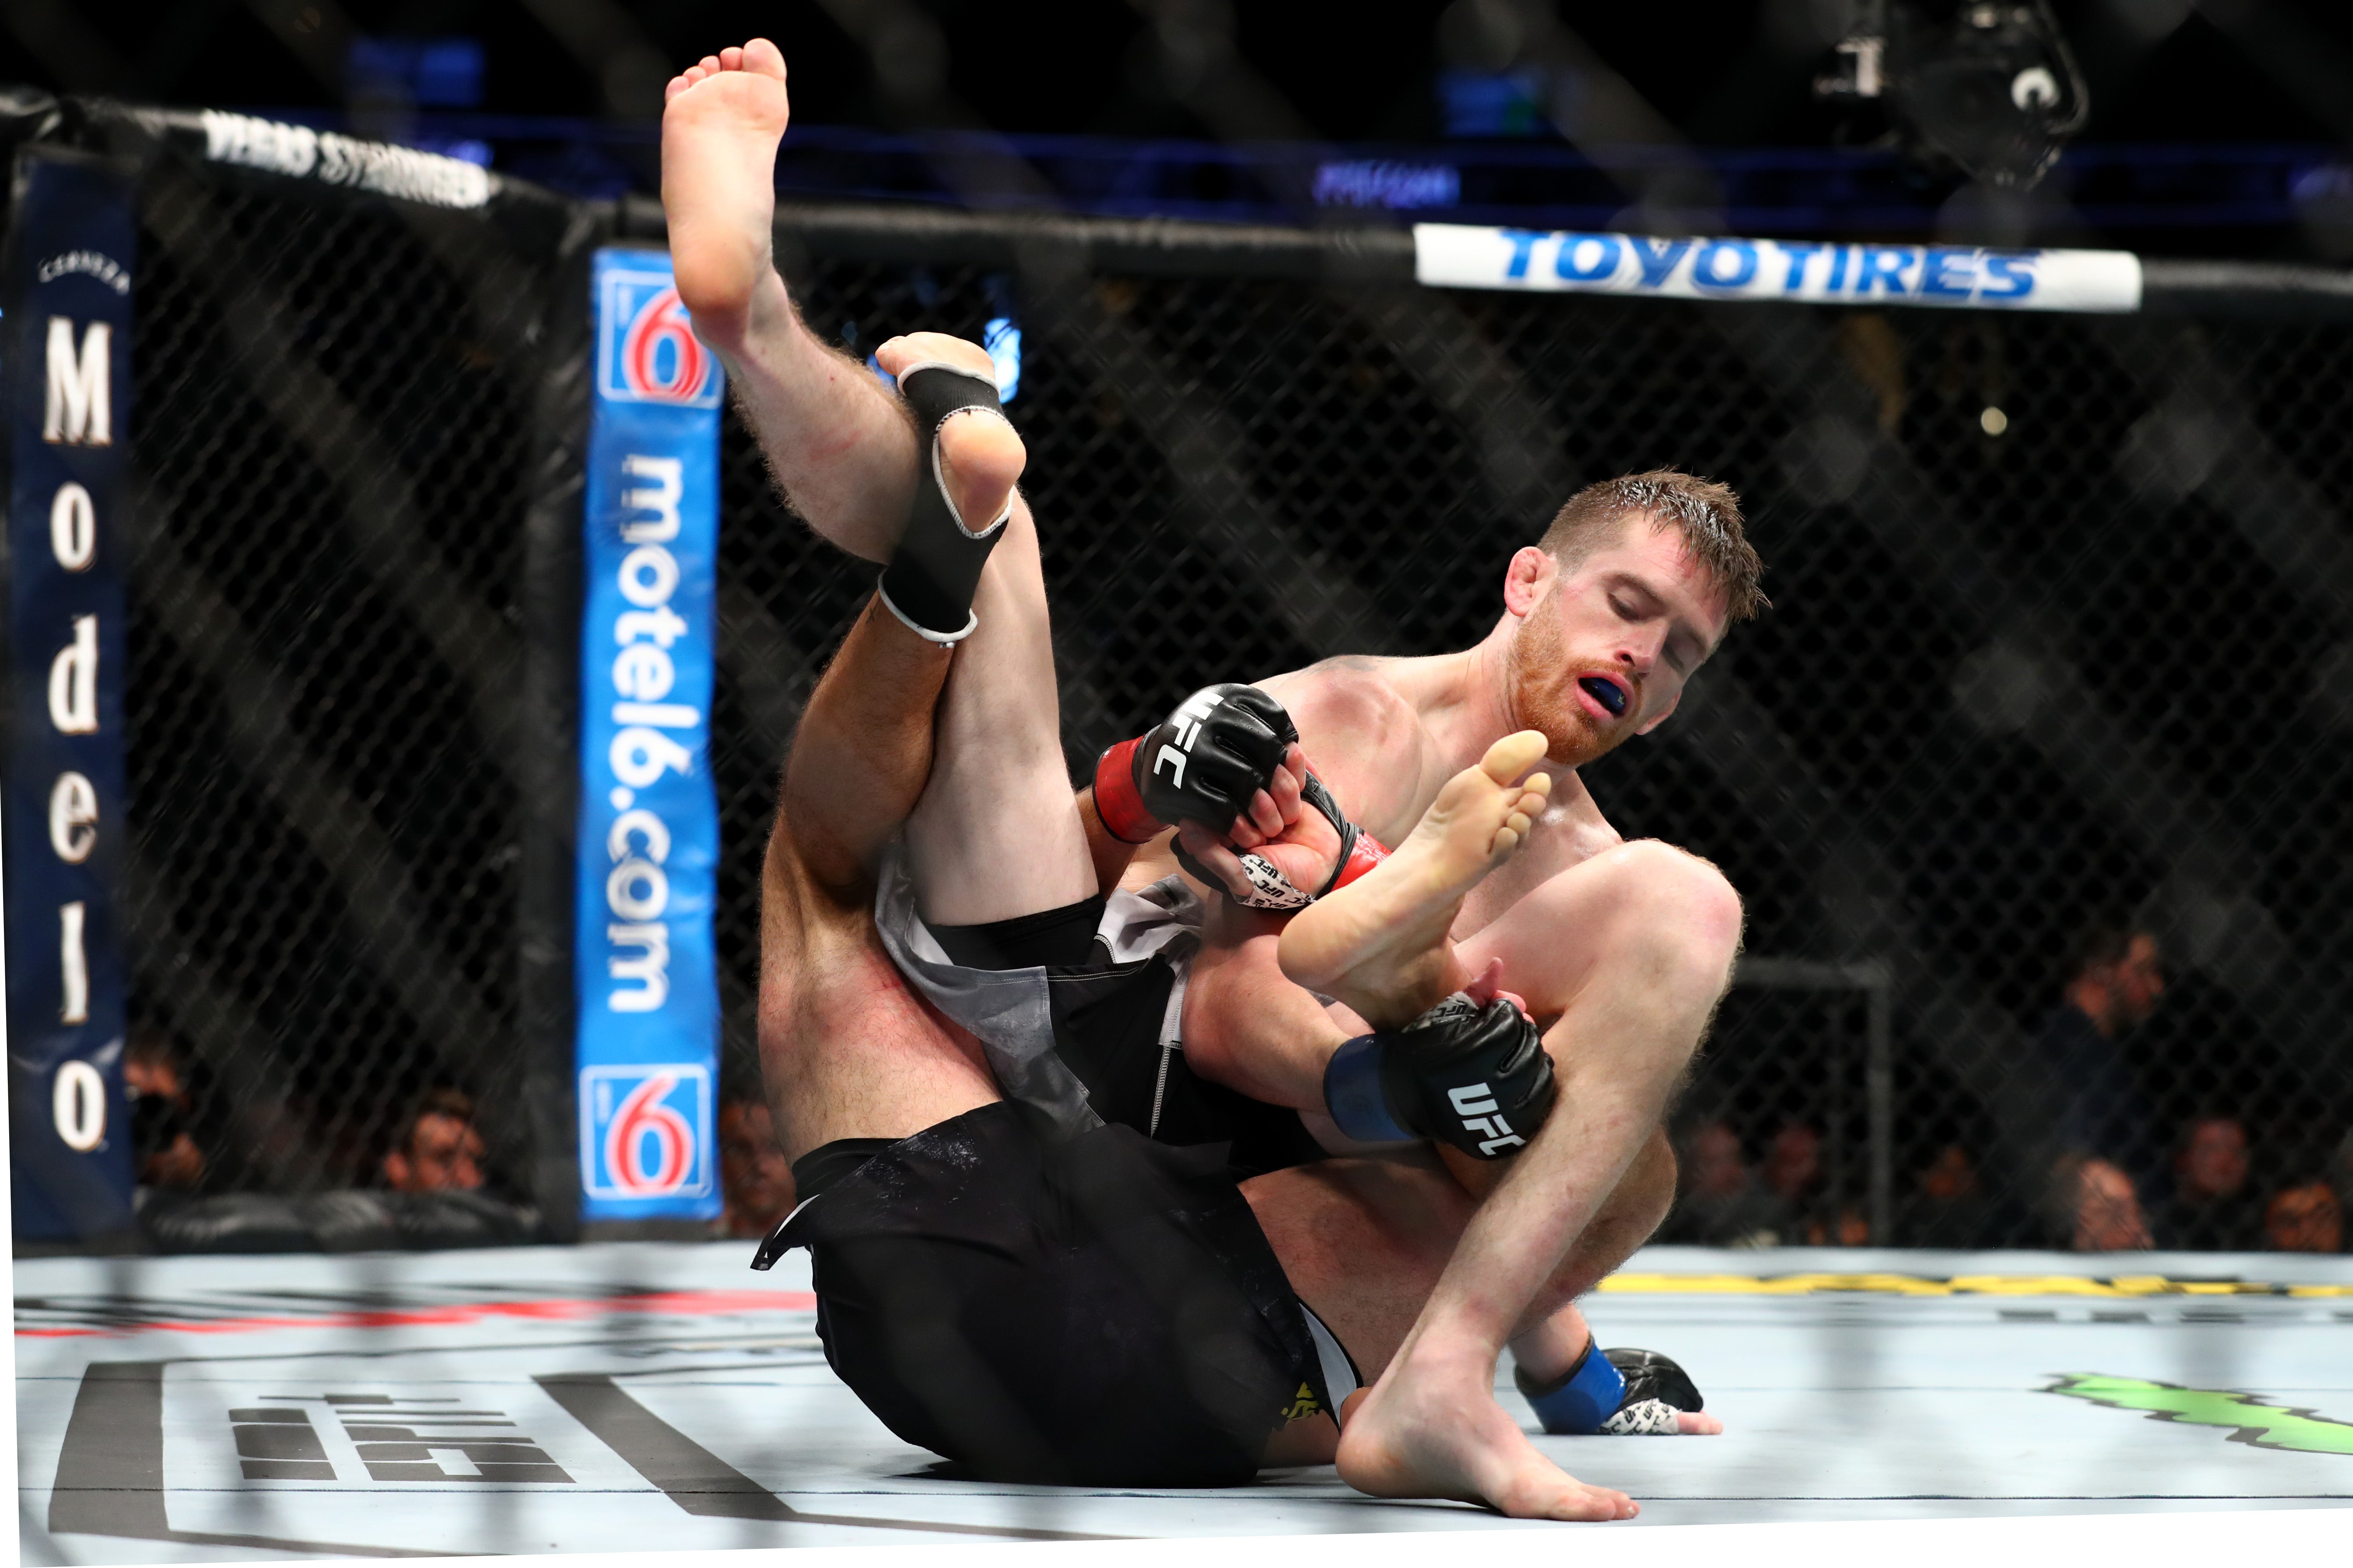 Bantamweight UFC contender Cory Sandhagen in action against Raphael Assuncao